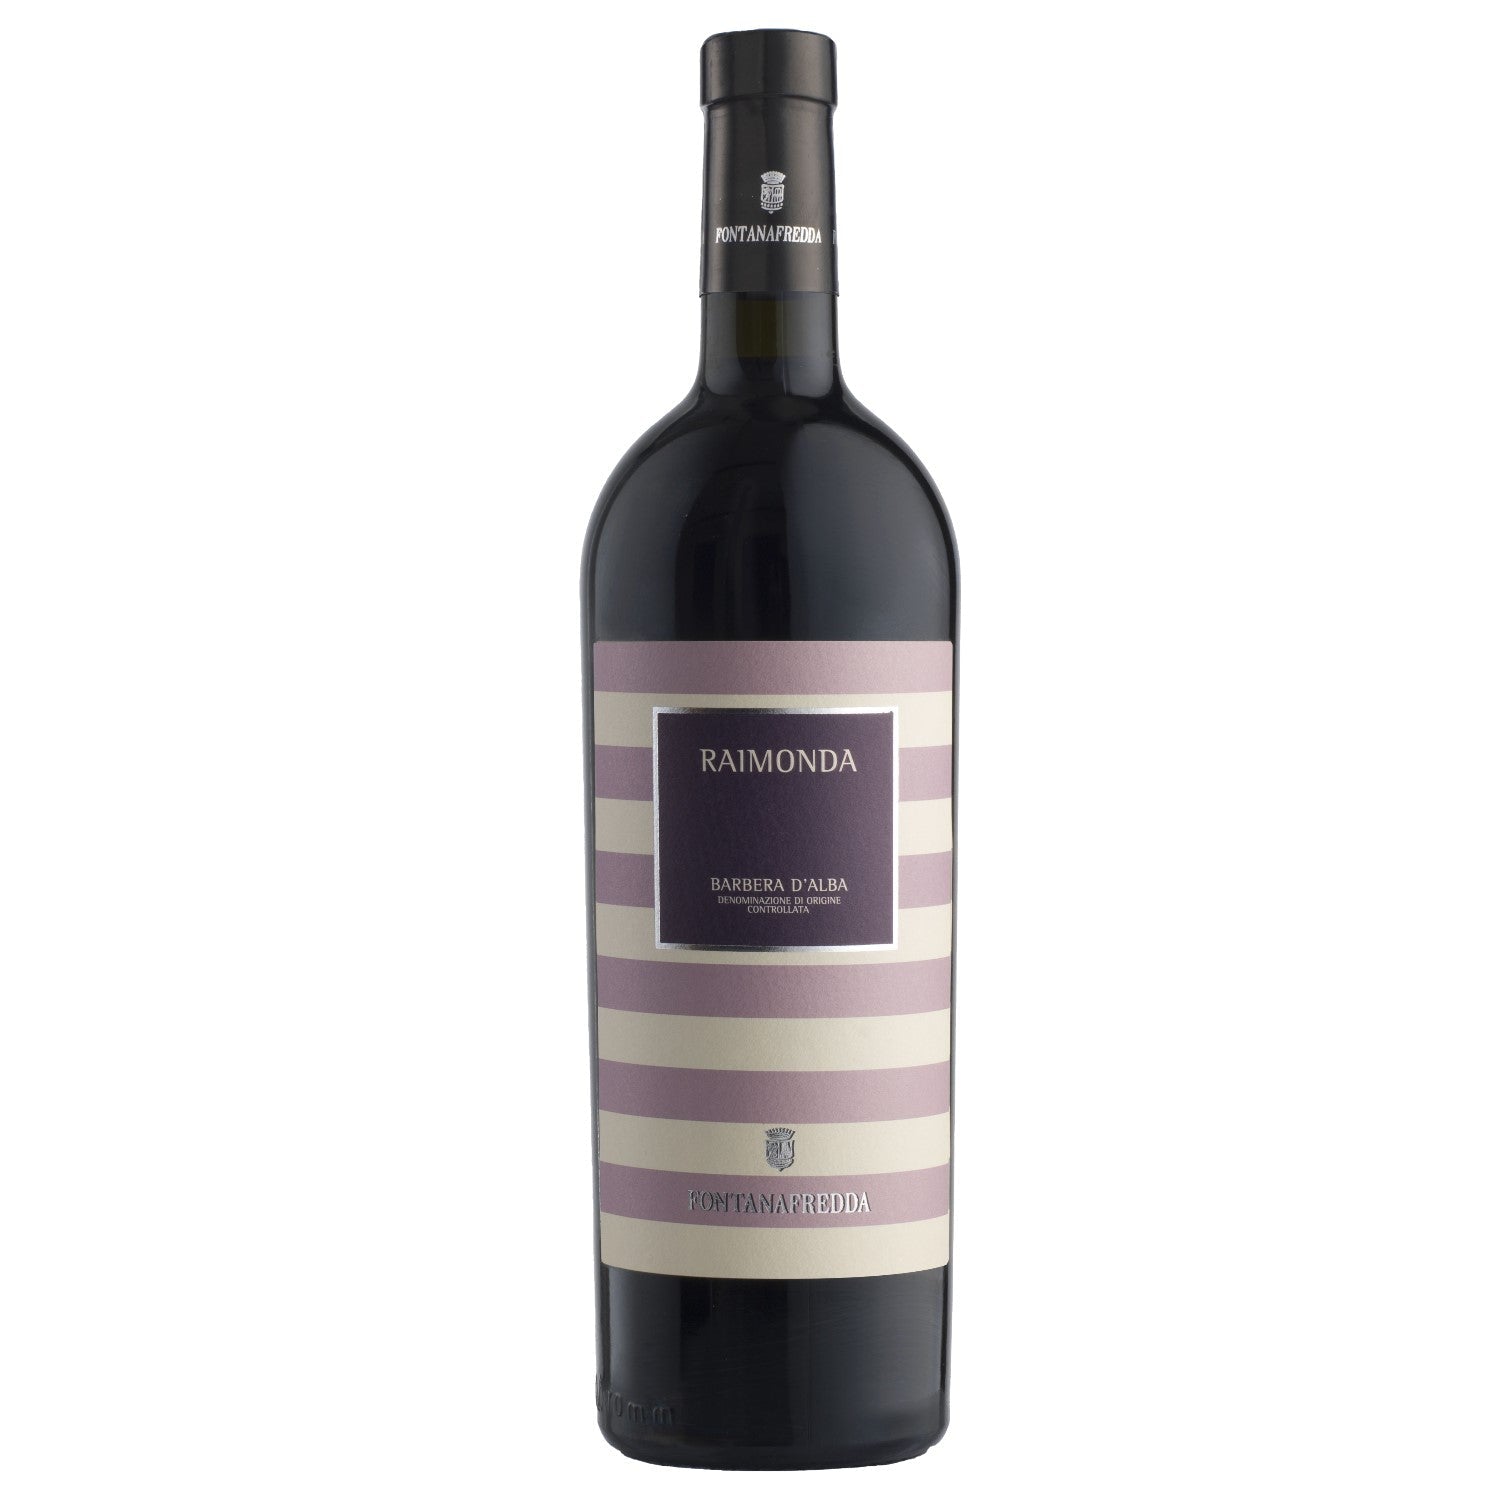 Fontanafredda Raimonda Barbera d'Alba DOC Rotwein Wein trocken Italien (3 x 0.75l) - Versanel -